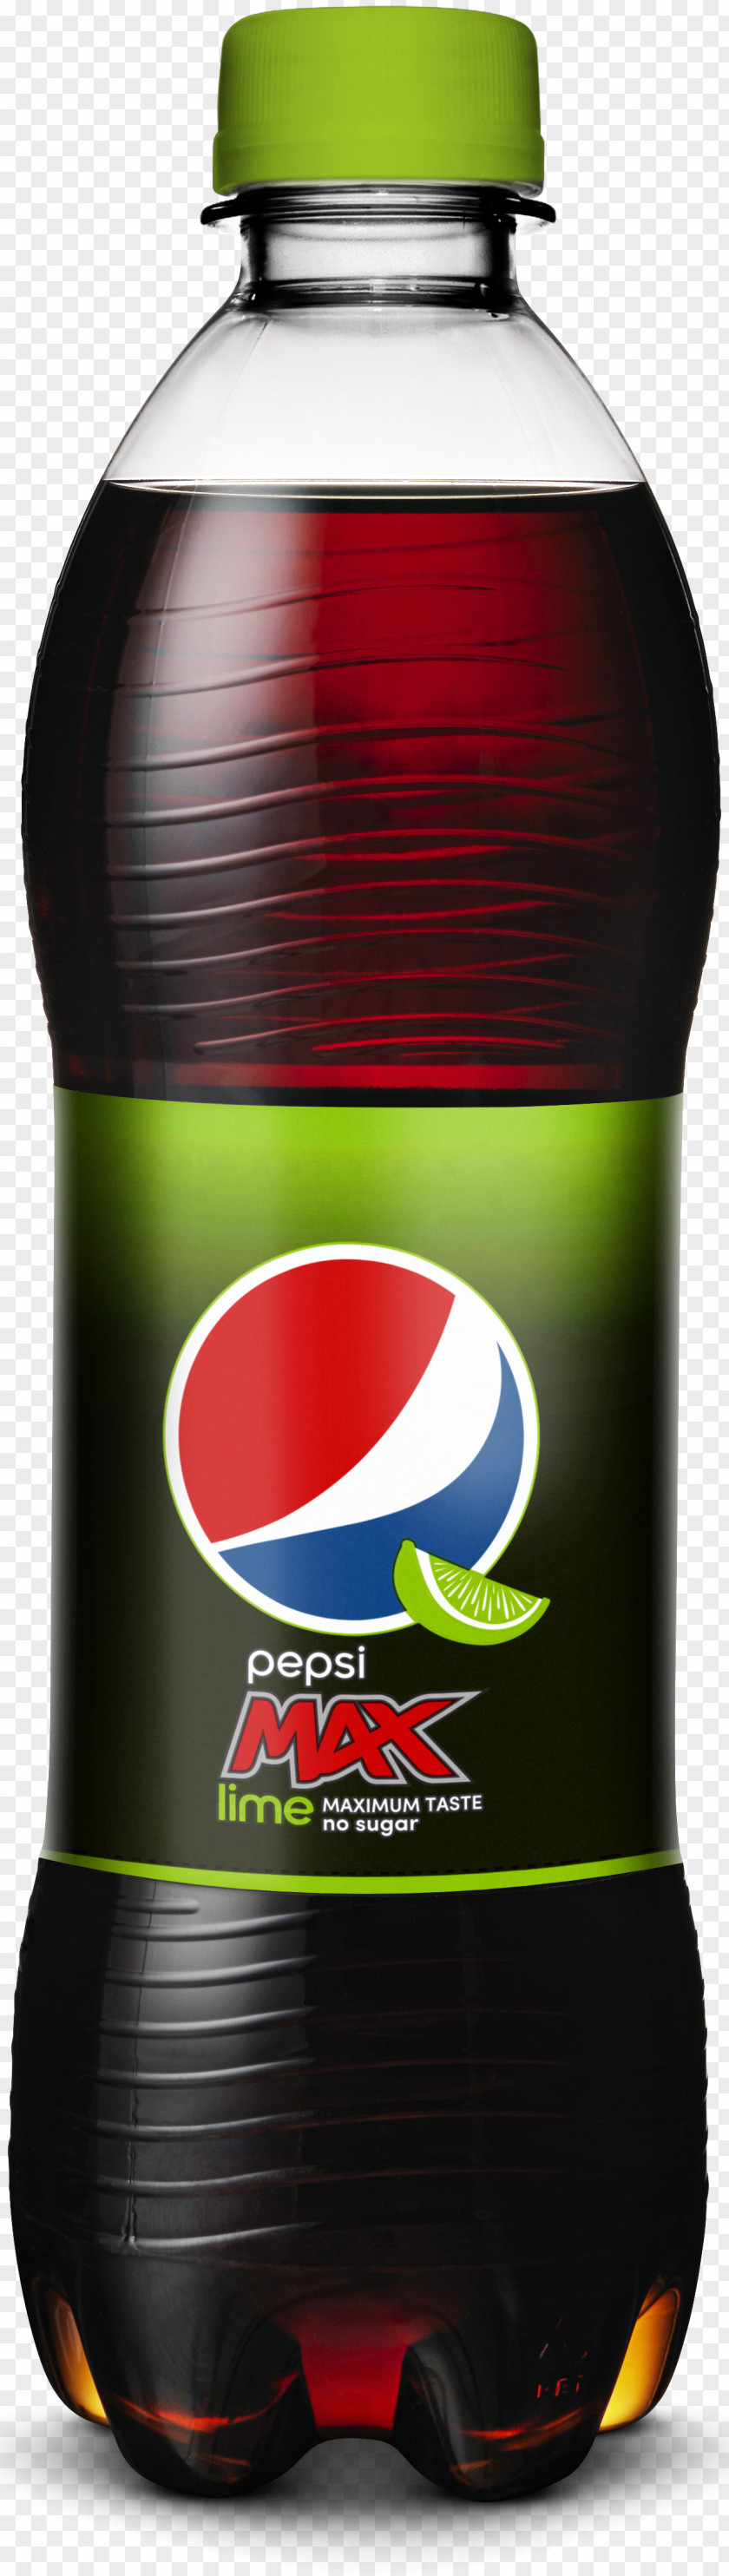 Pepsi Max Fizzy Drinks Lemon-lime Drink Iced Tea PNG